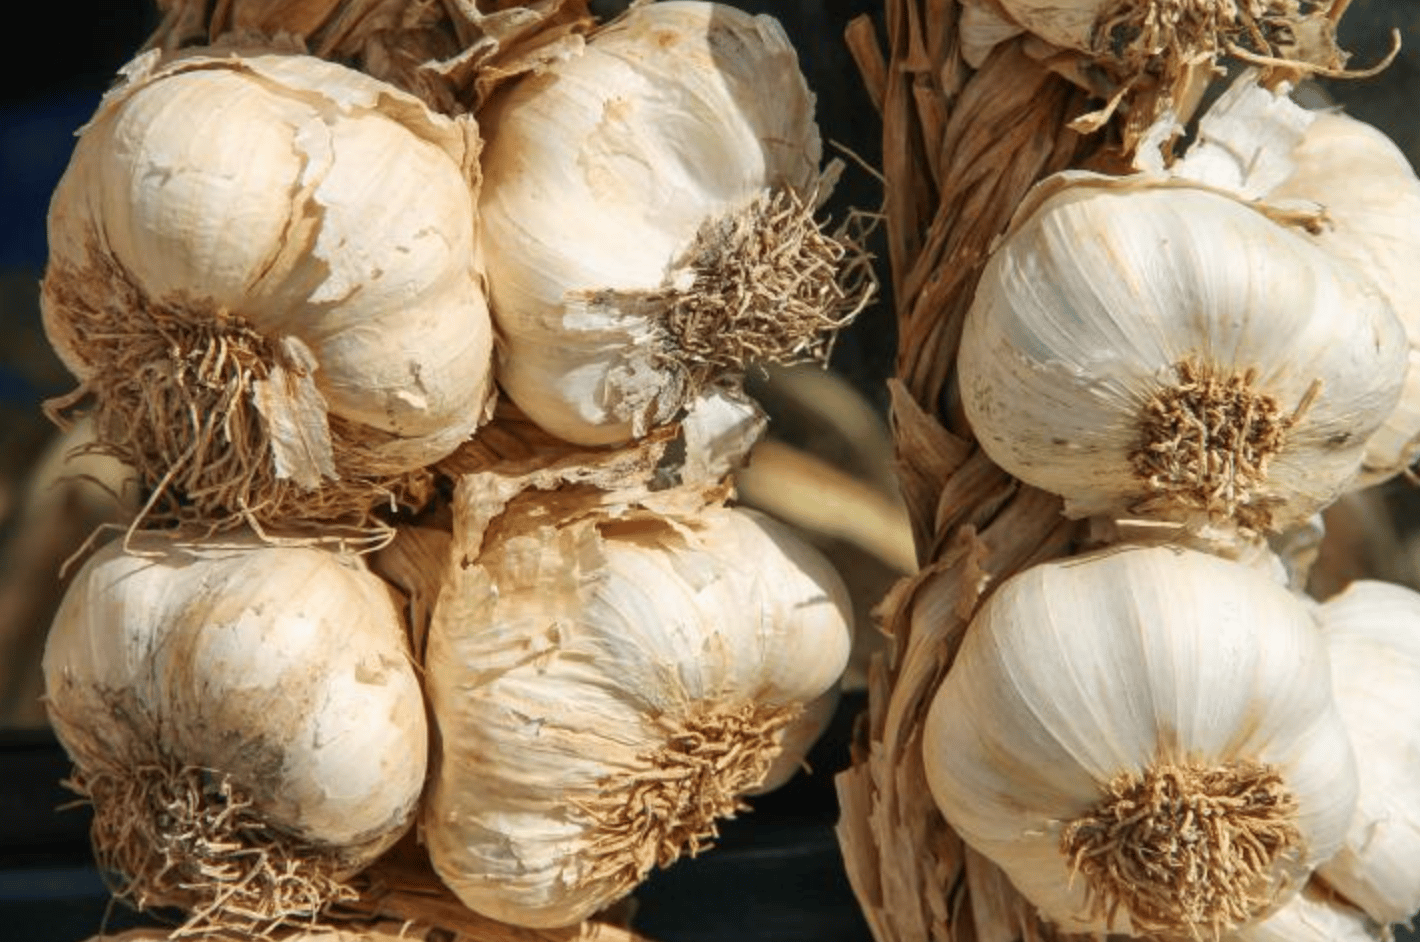 Store garlic